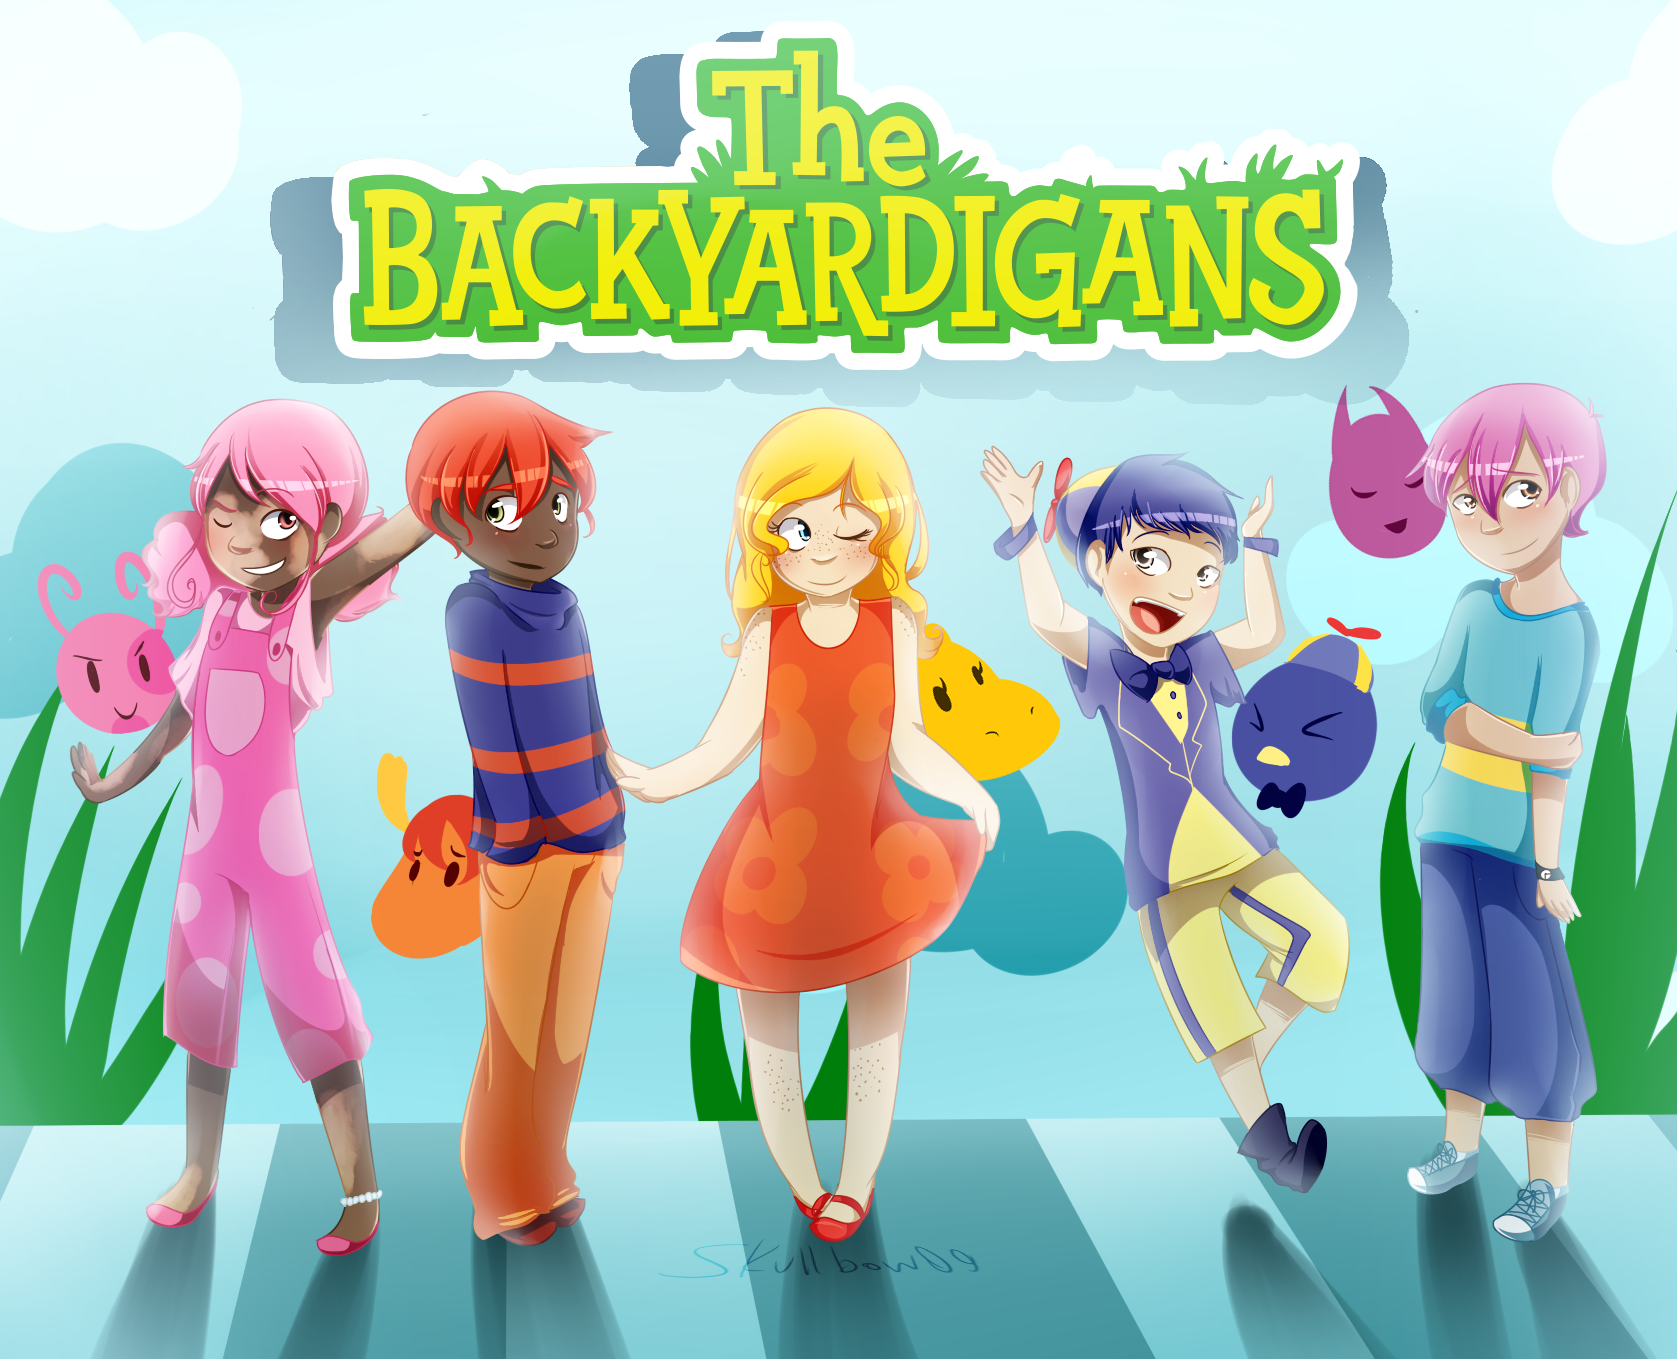 The Backyardigans Wallpaper. The Backyardigans Wallpaper, Backyardigans Tyrone Wallpaper and The Backyardigans Background